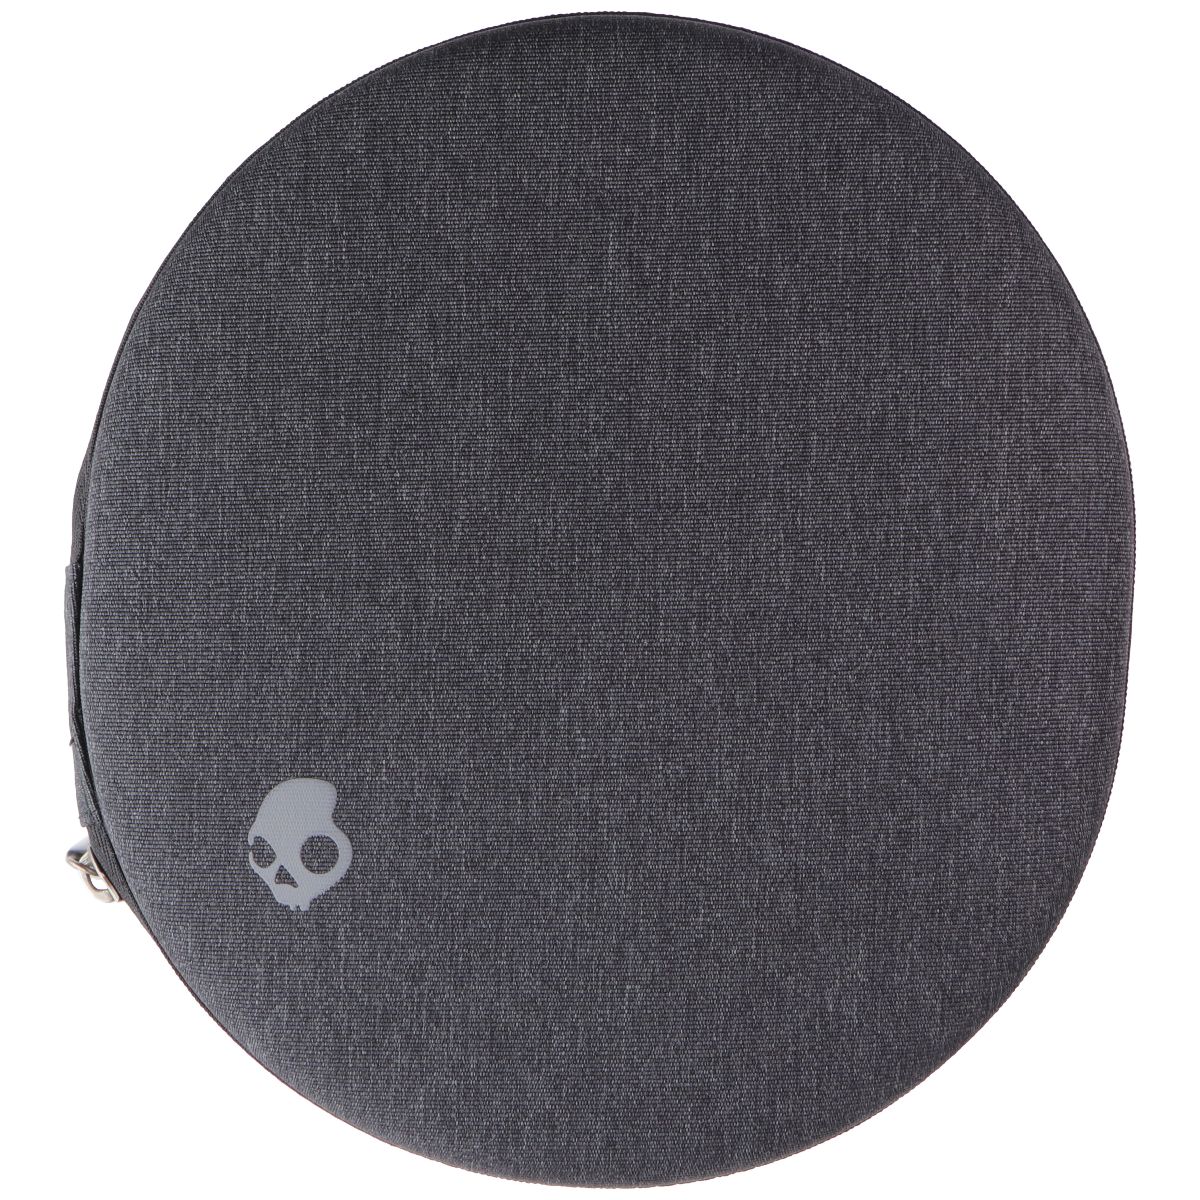 Skullcandy Venue Wireless ANC Over-Ear Headphone - Black (S6HCW-L003)